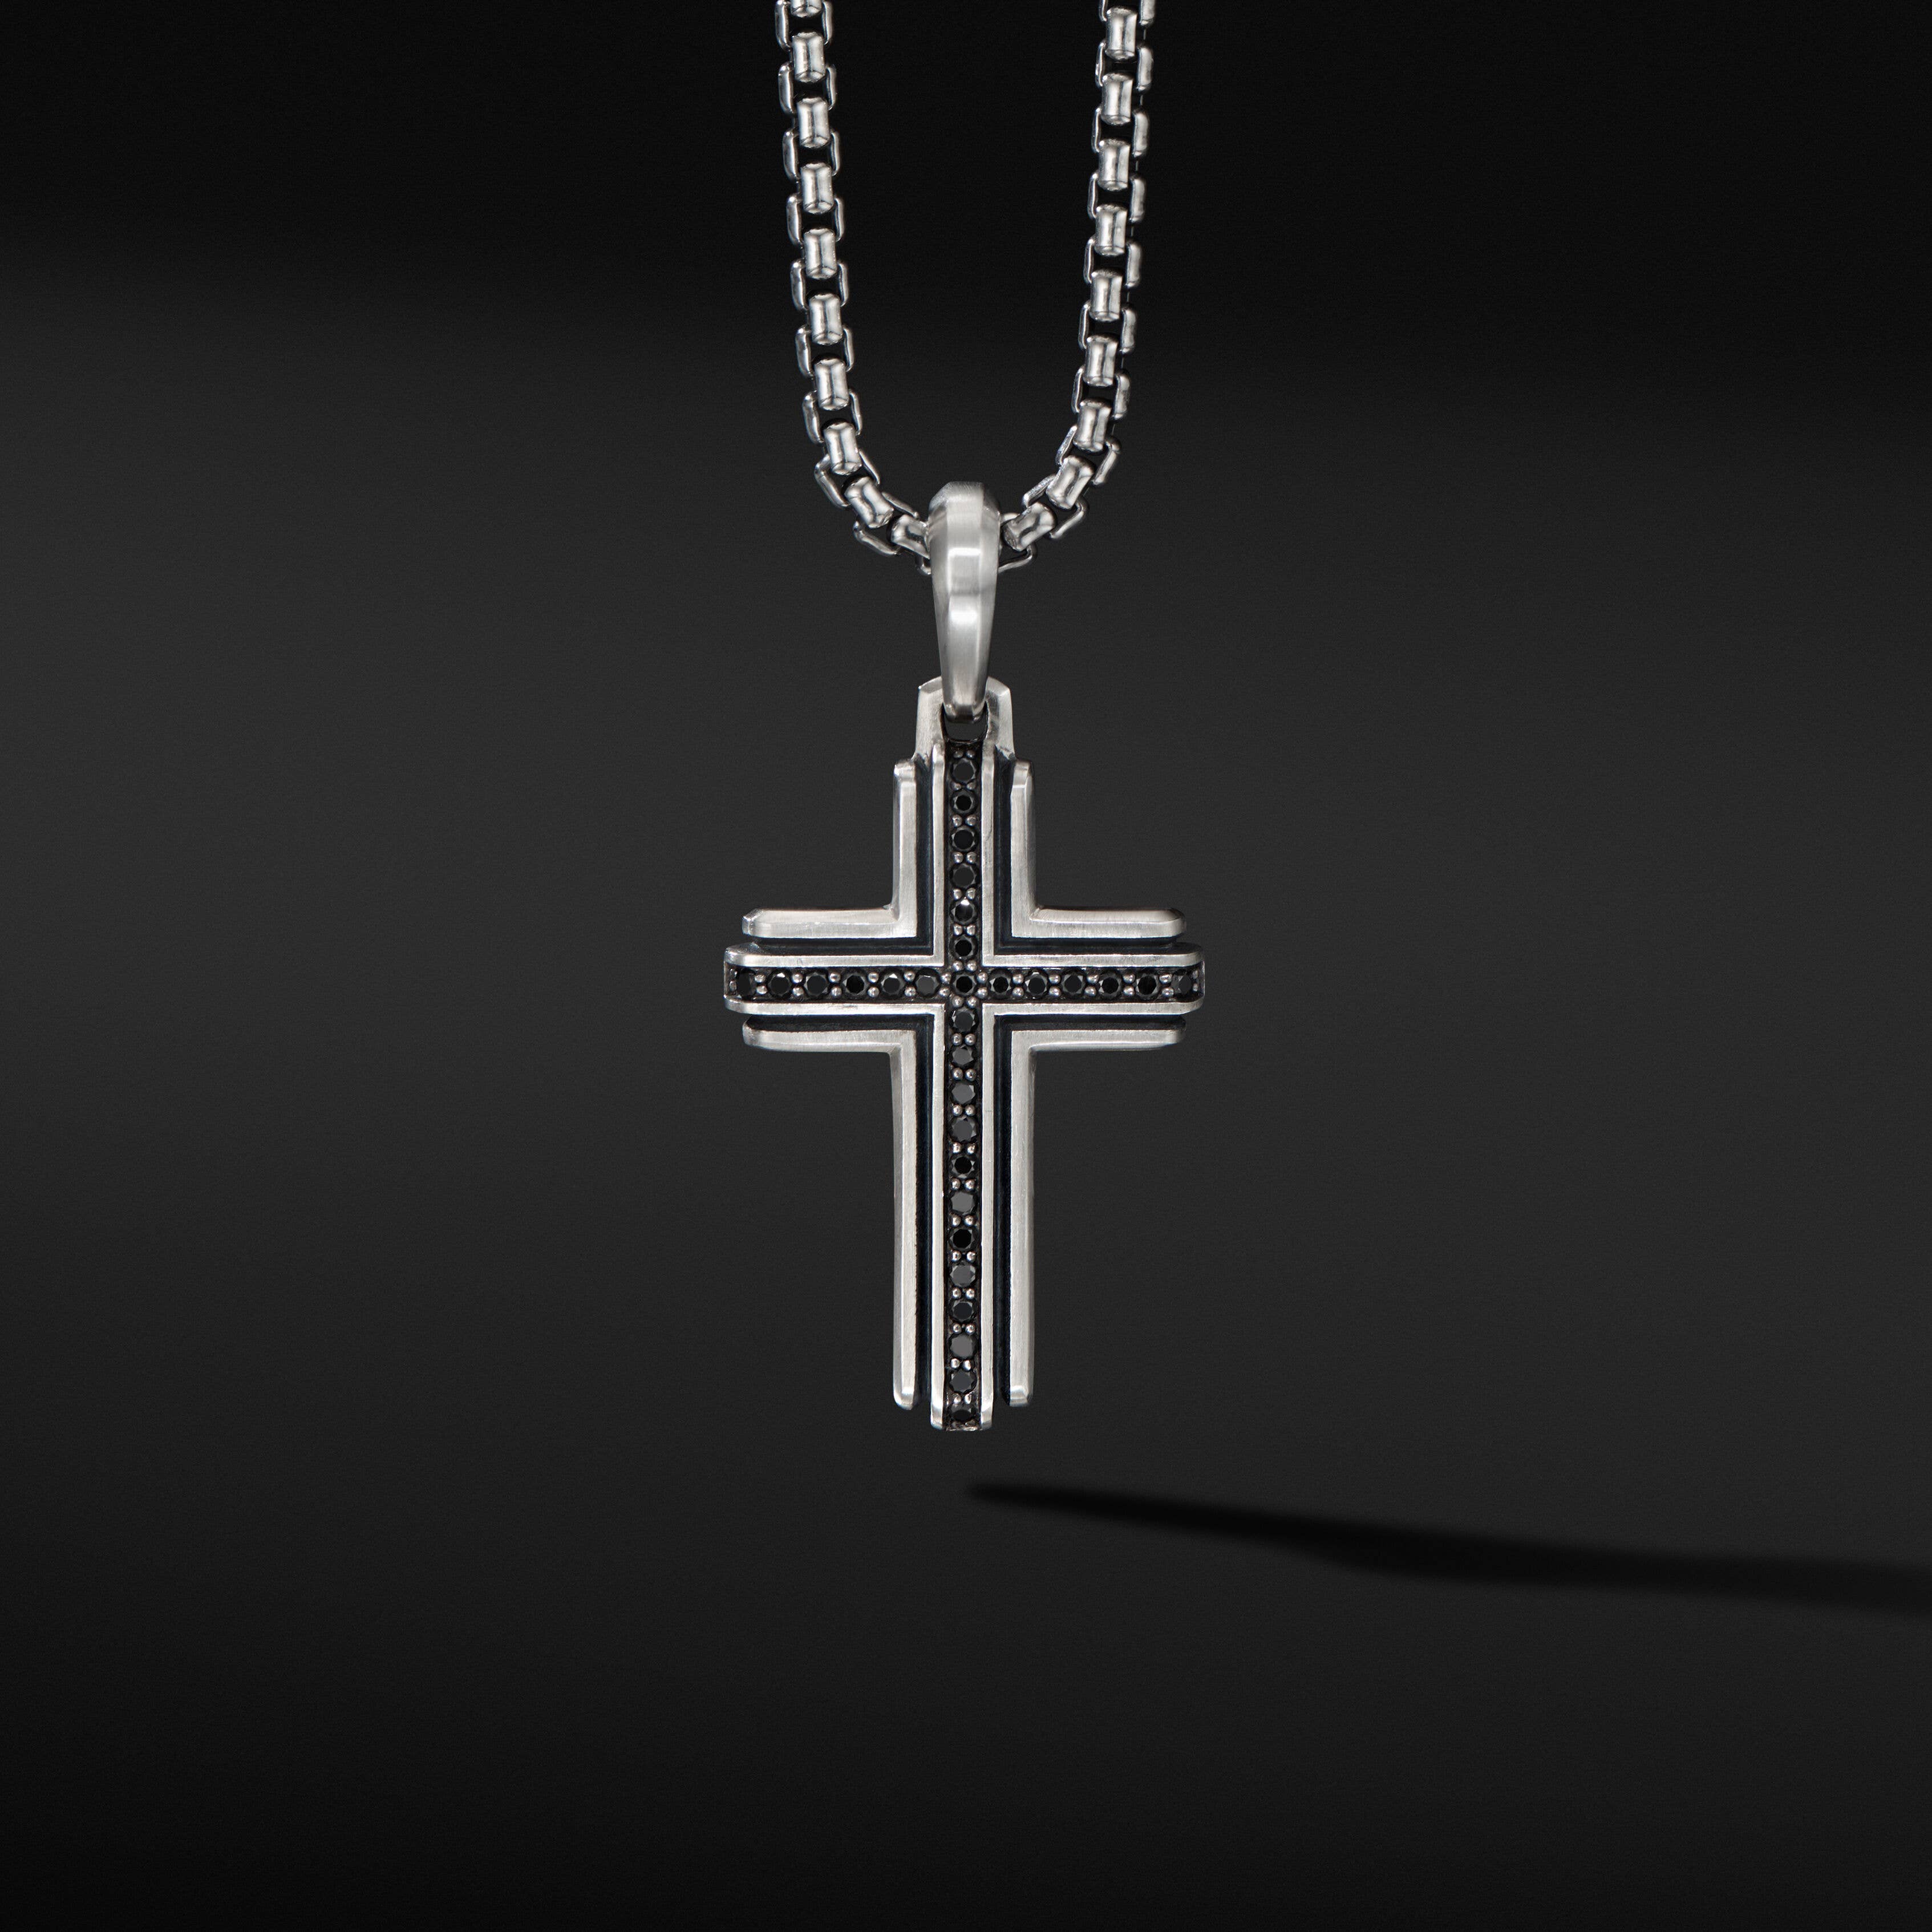 Deco Cross Pendant in Sterling Silver with Pavé Black Diamonds